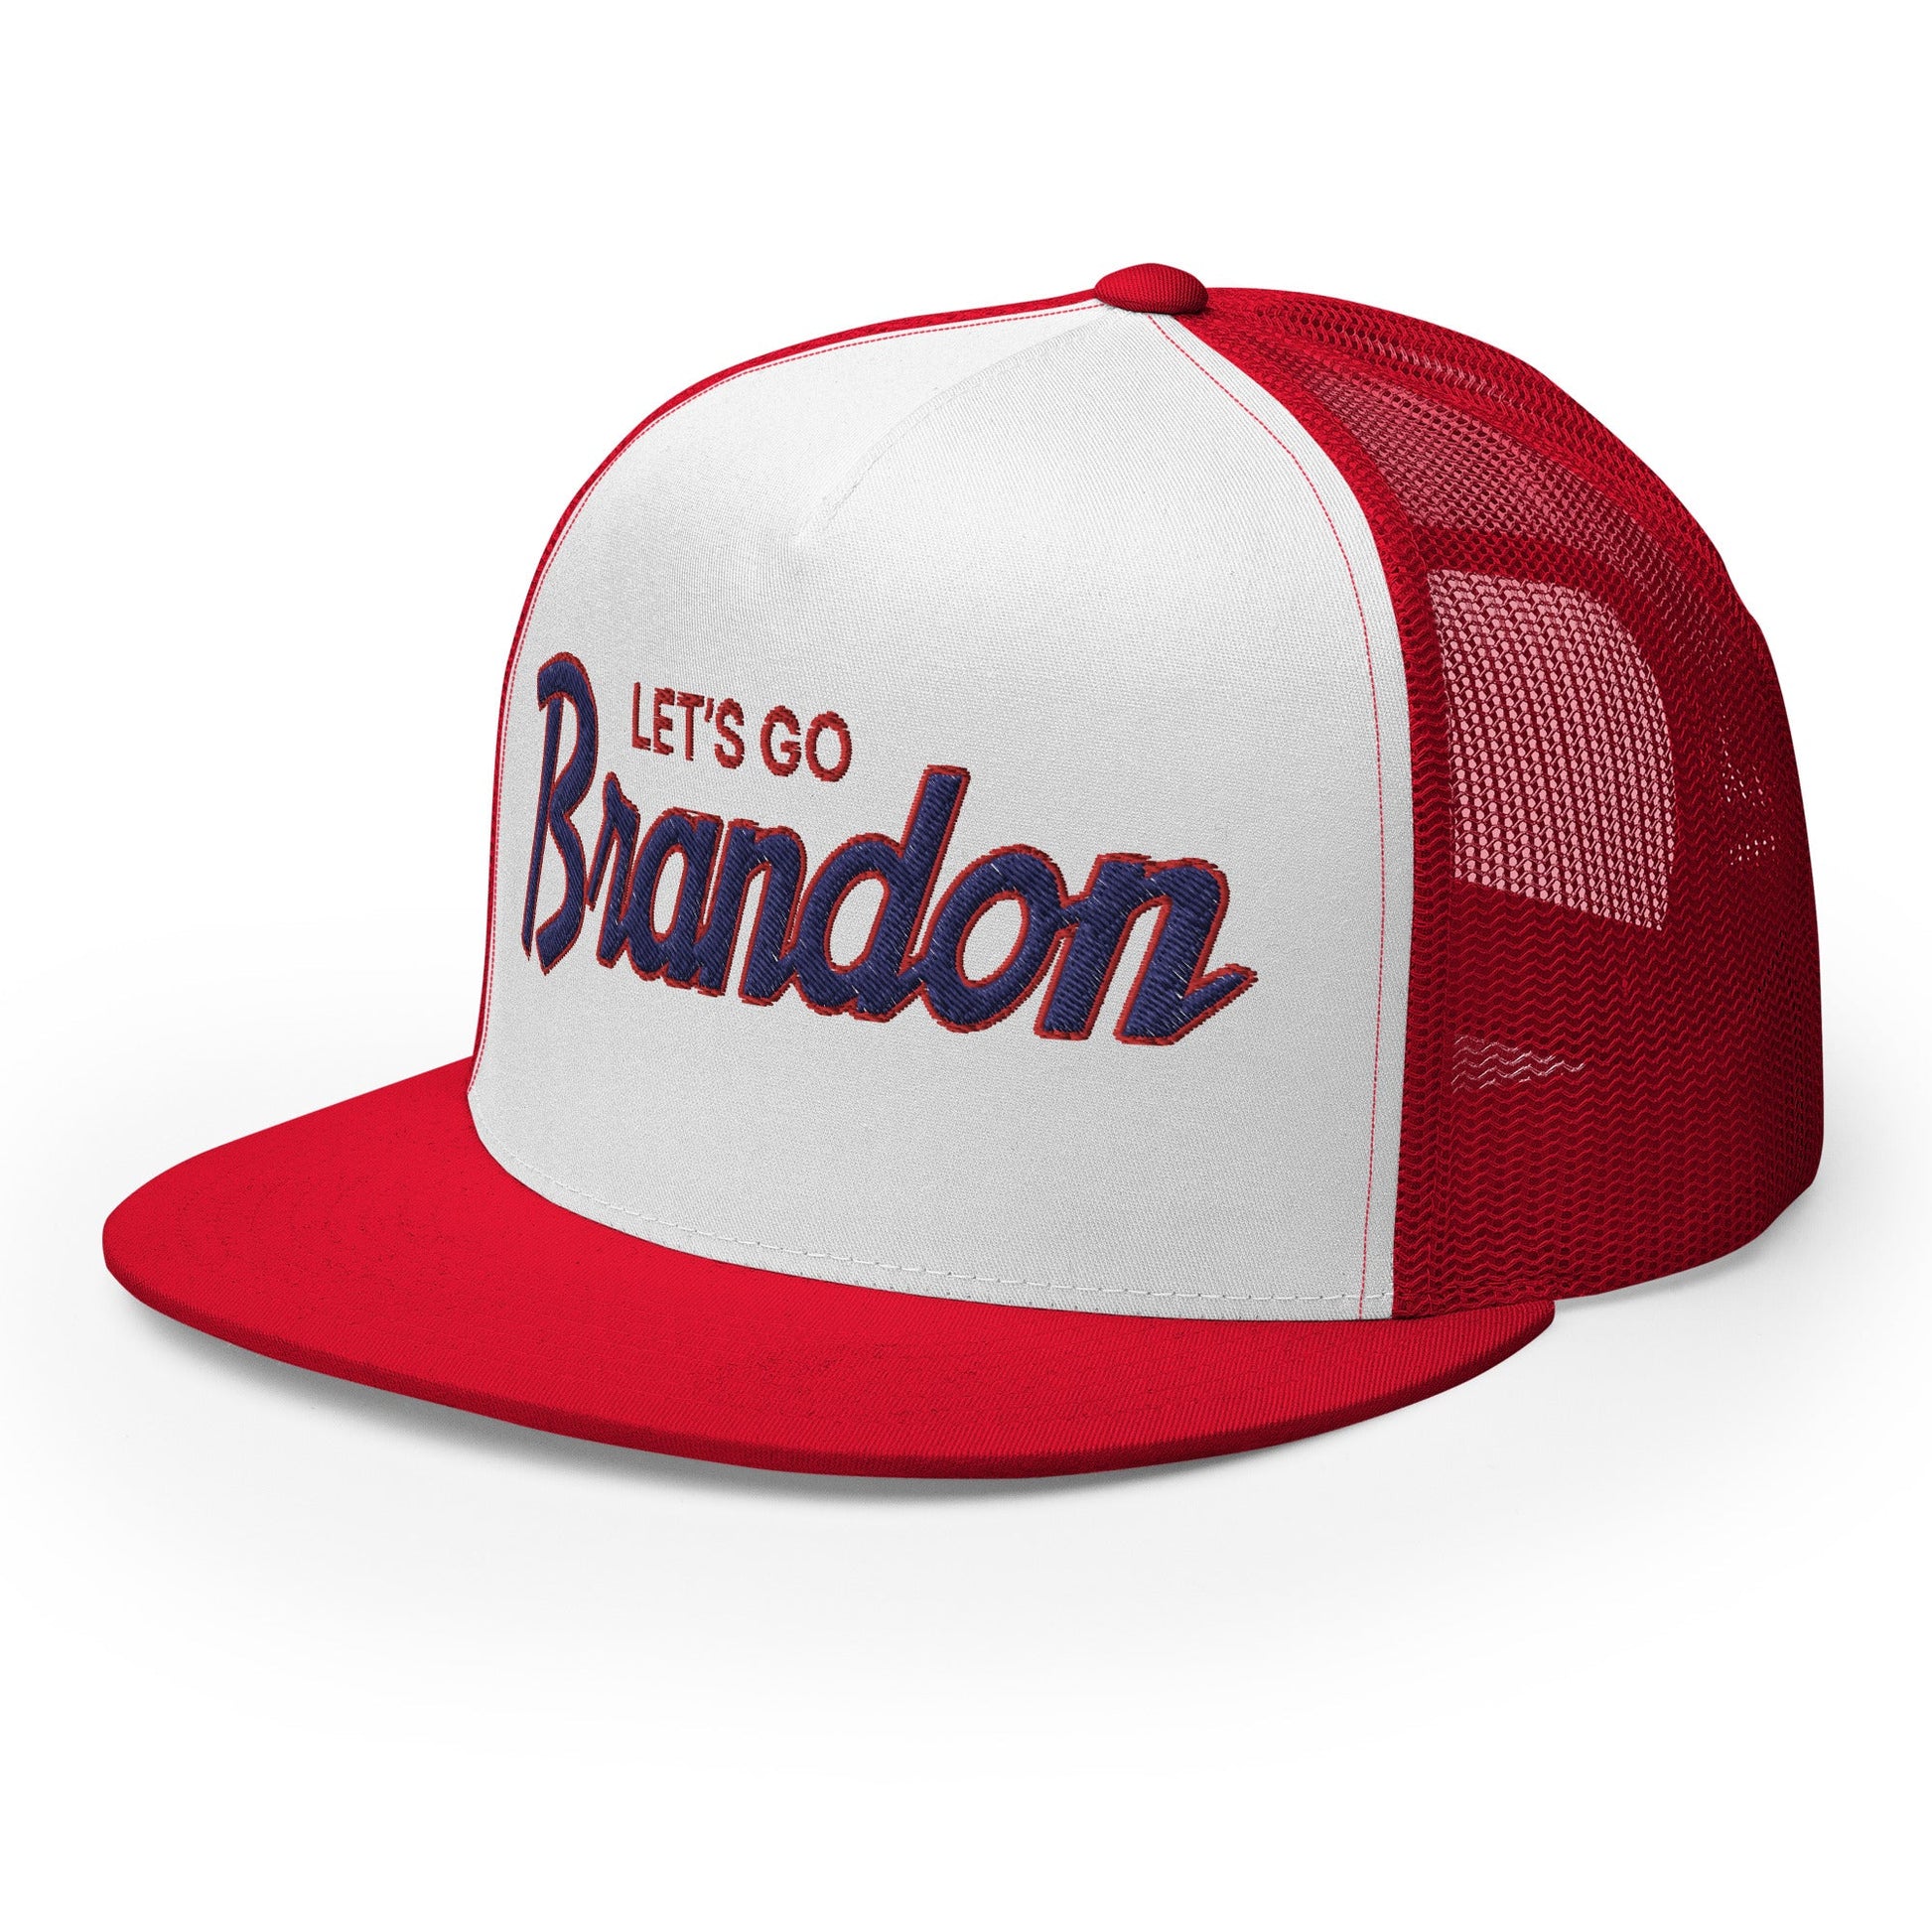 Let's Go Brandon Script Flat Bill Brim Snapback Trucker Hat Red White Red